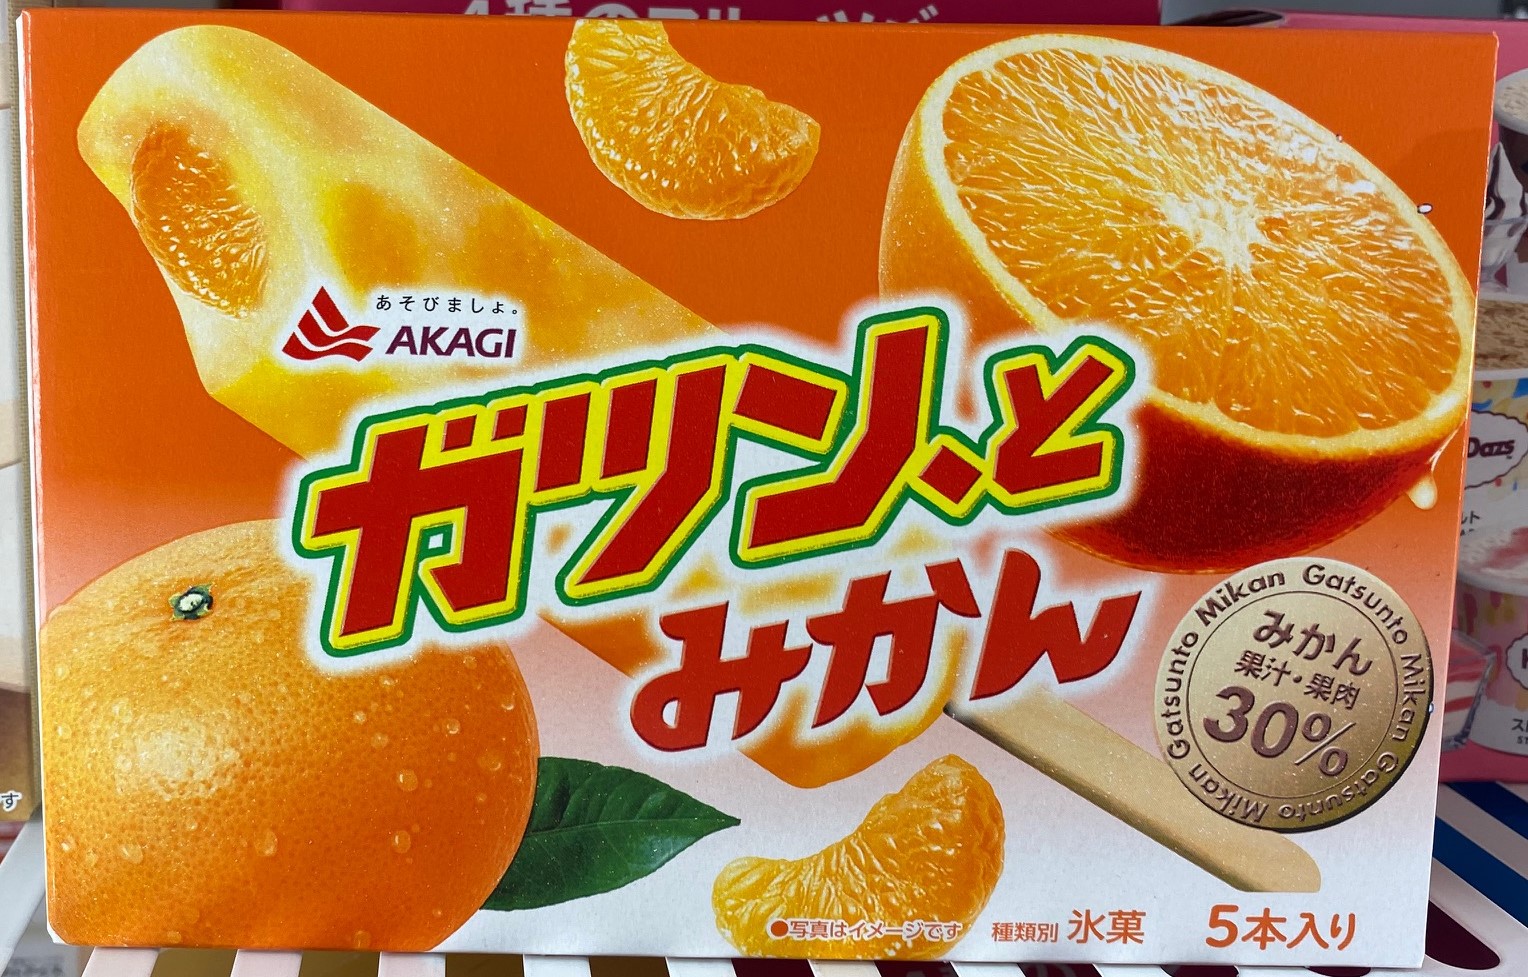 Akagi Mandarin with a Kick, Multipack, 7-11